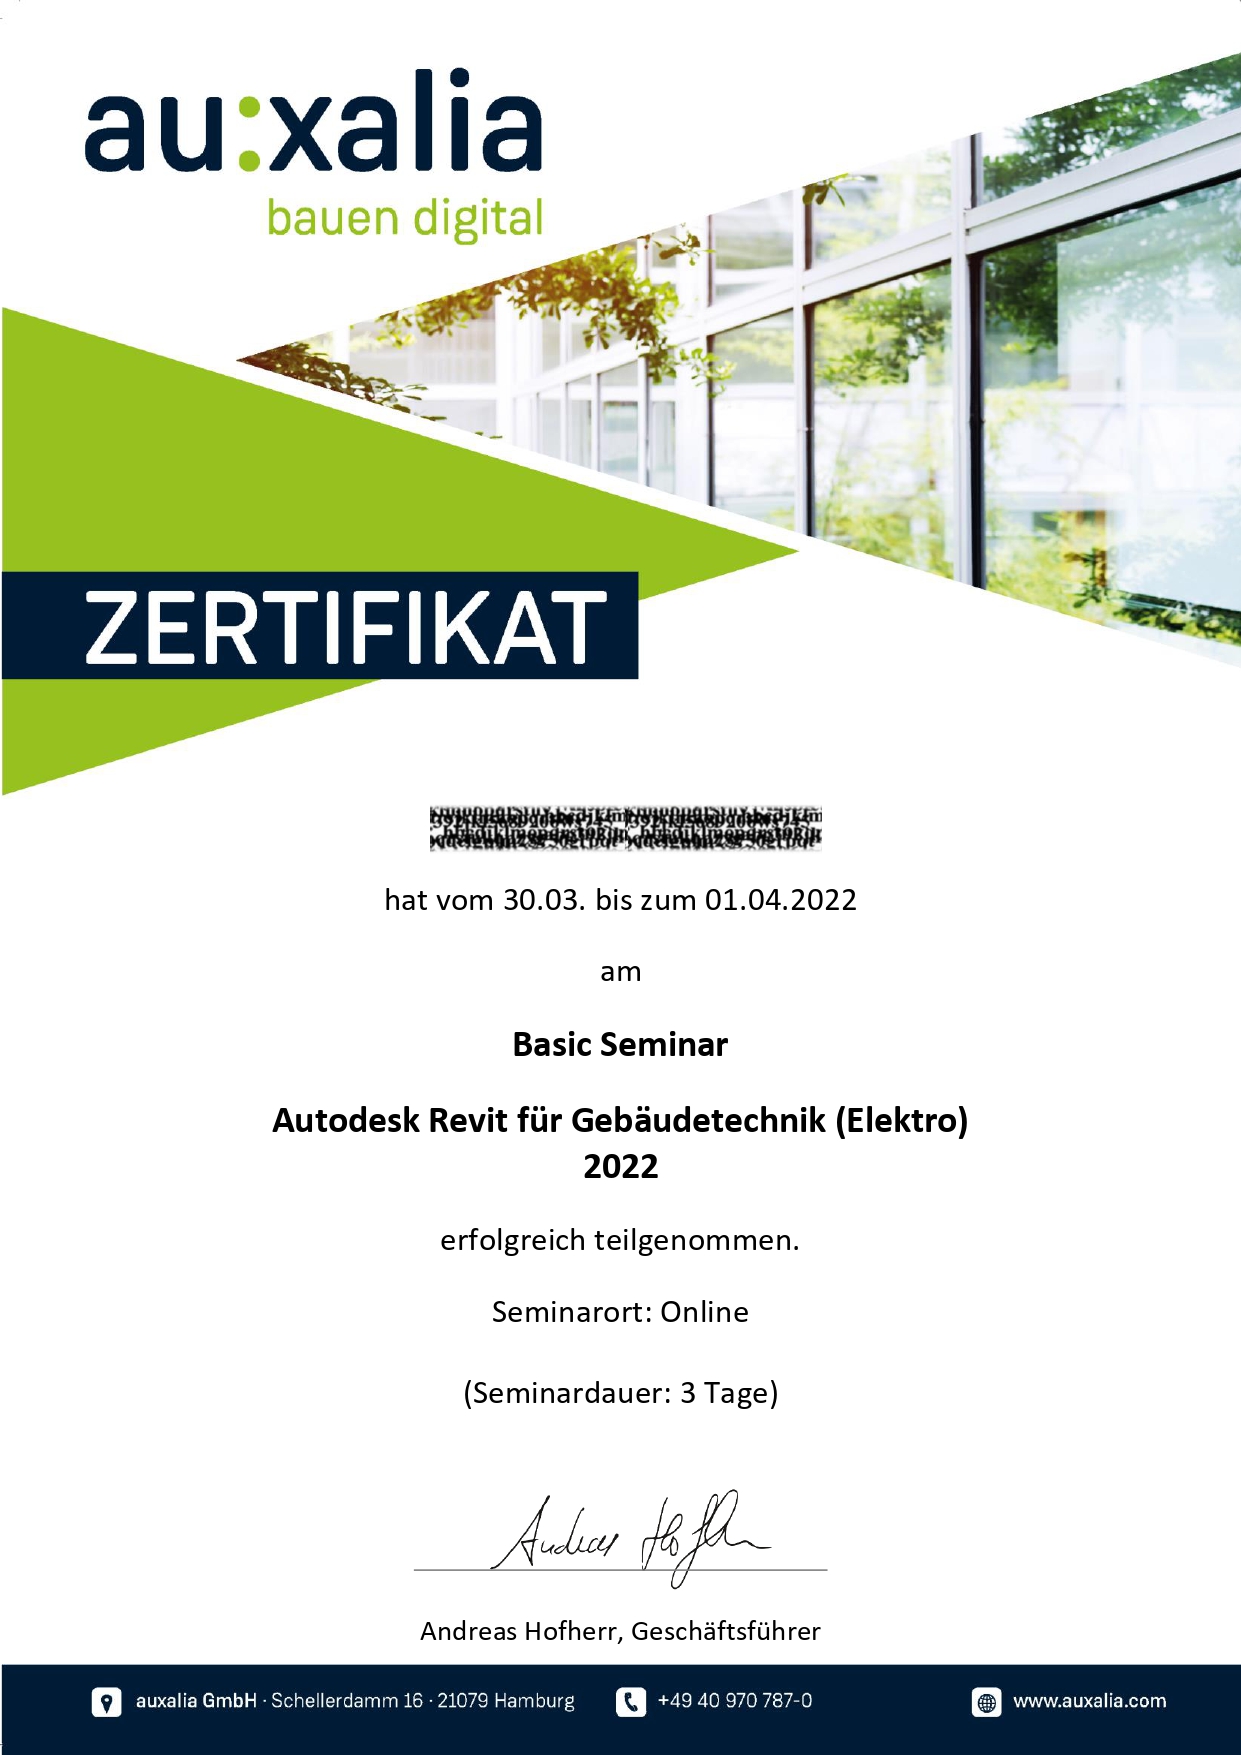 sineplan - Zertifikat Auxalia 2022 Autodesk Revit fuer Gebaeudetechnik Basic